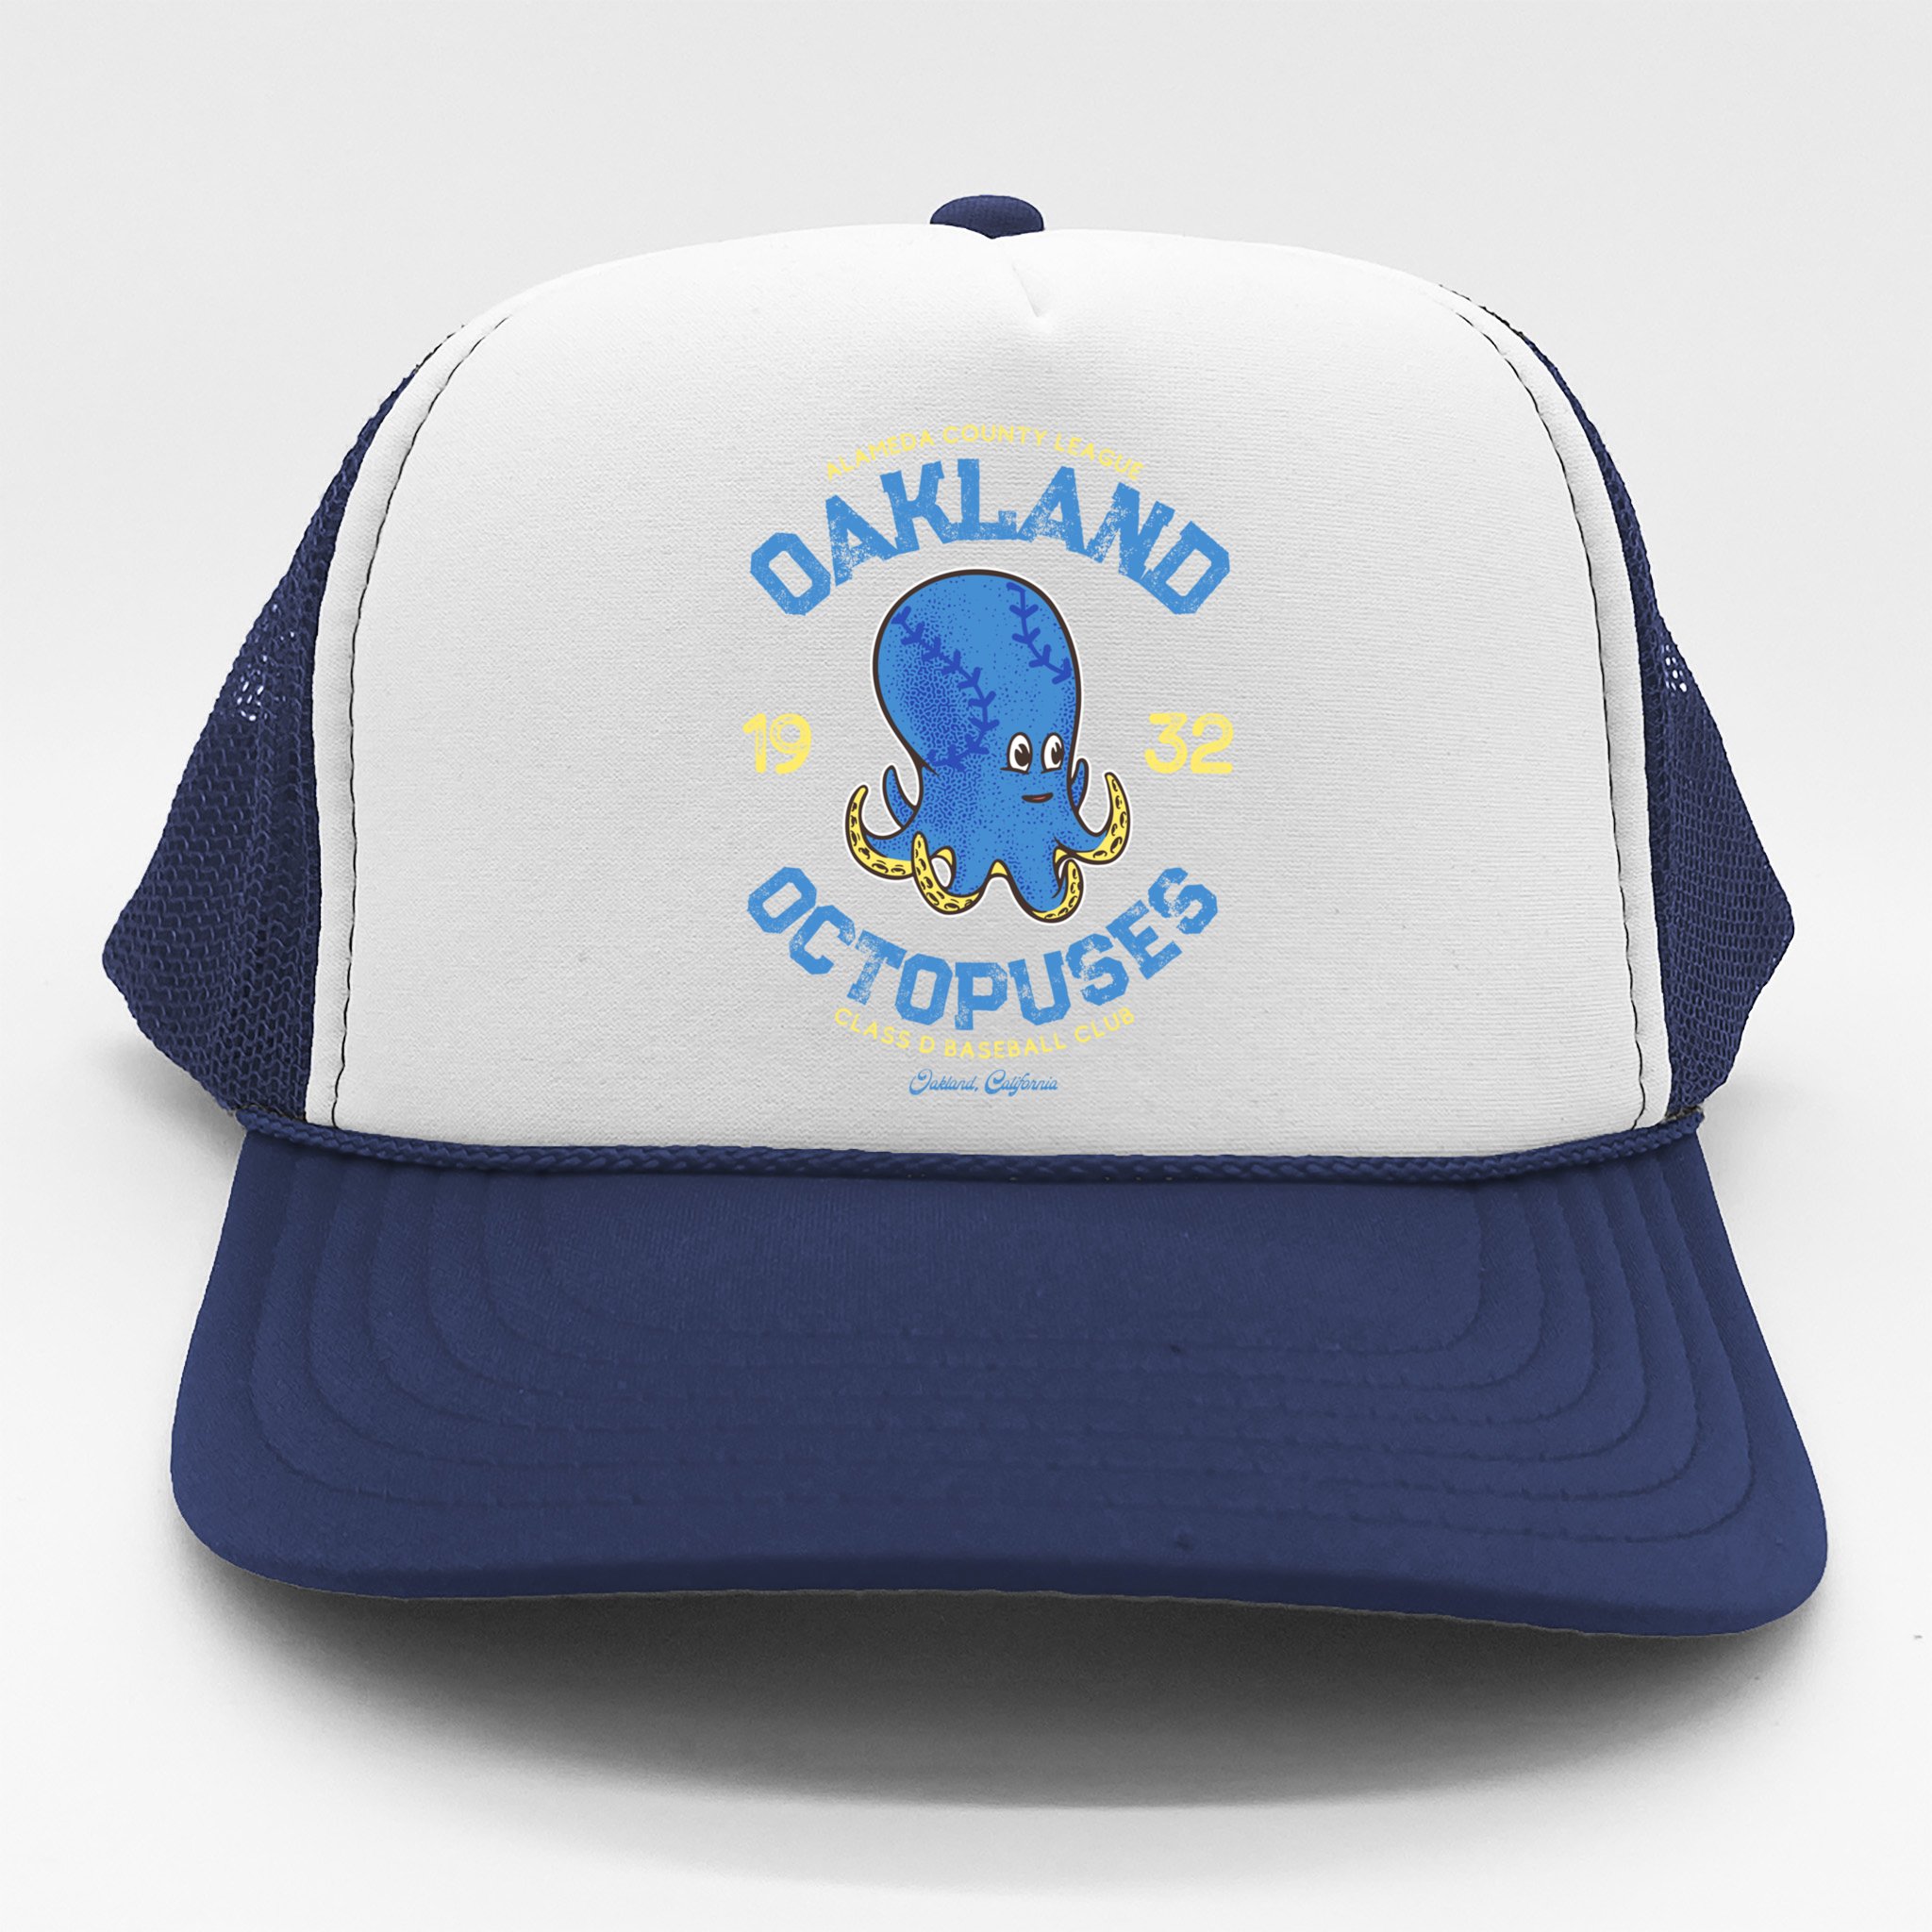 Oakland Octopuses Retro Minor League Baseball Team Gift Trucker Hat